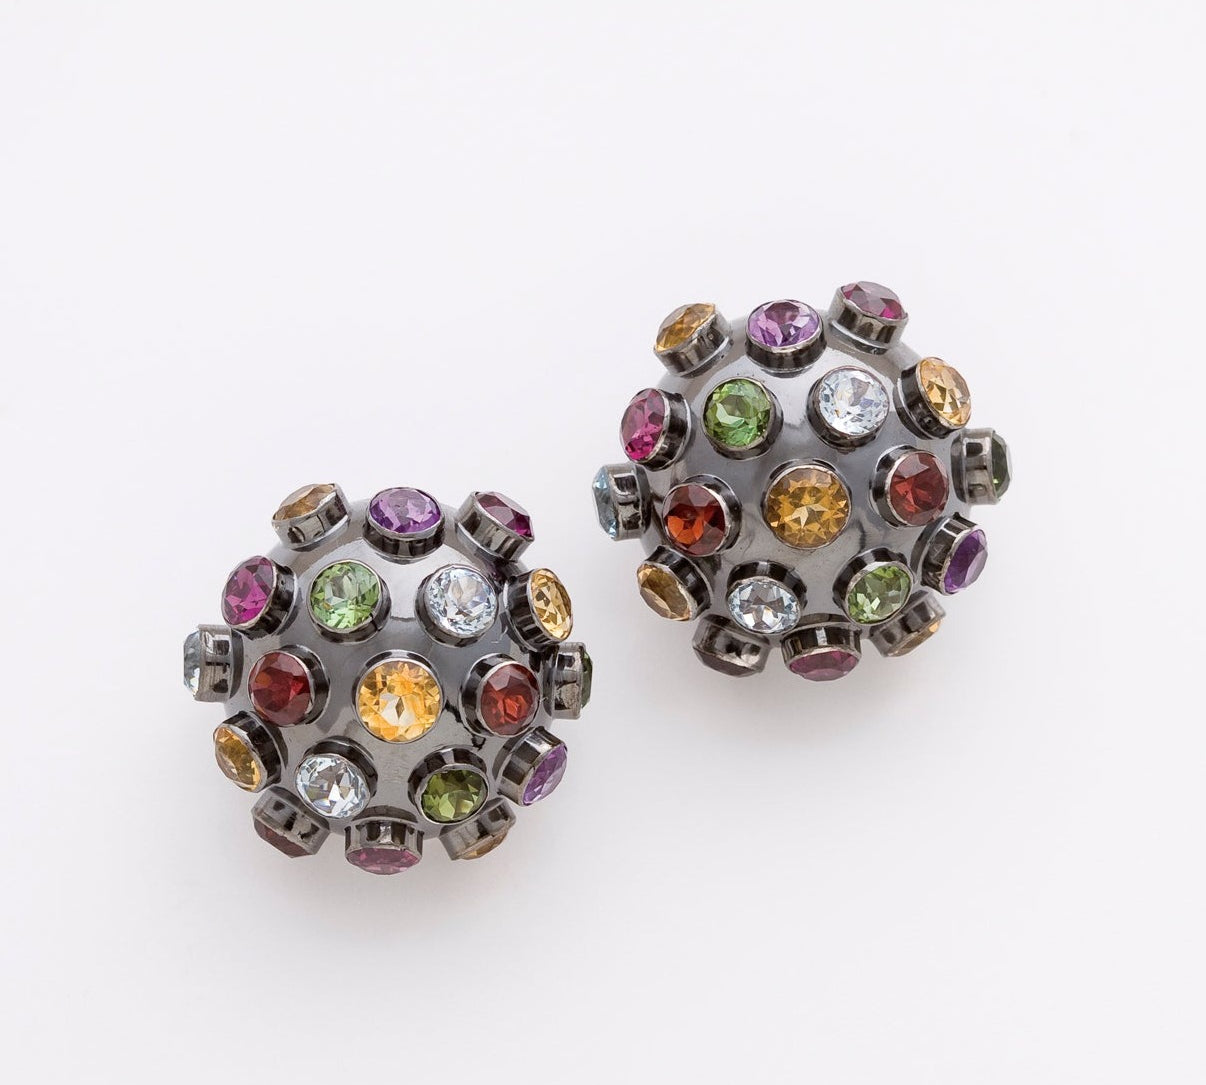 Blackened Gold  Earrings with Colored Stones Stud Earrings Carolyn Rodney   